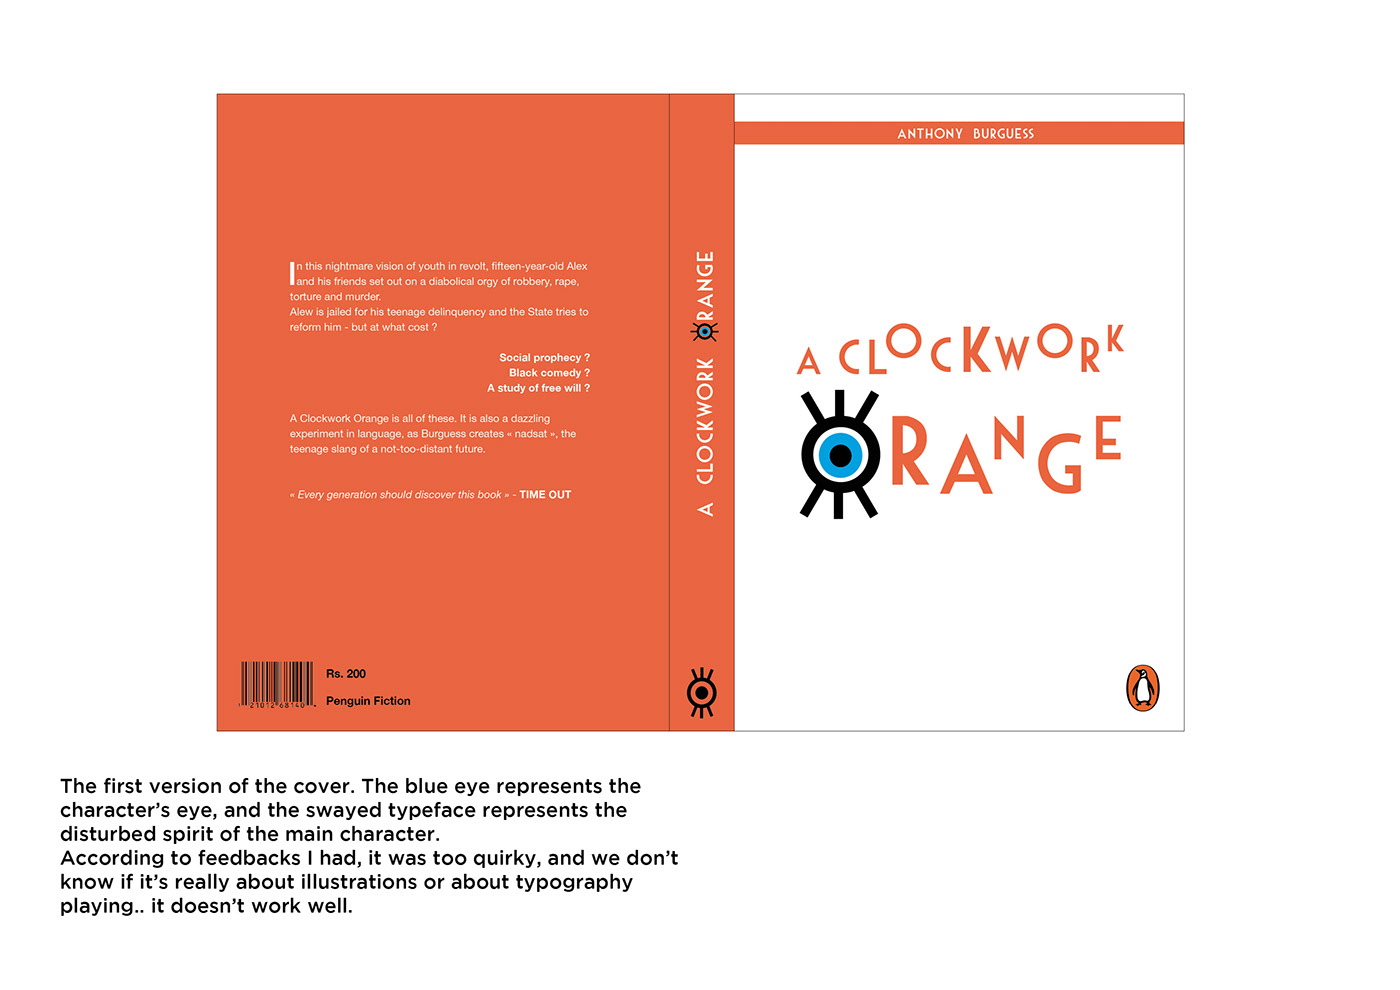 a clockwork orange anthony burguess book design editorial design  ILLUSTRATION  creepy mesmerizing visual Experimental Typography